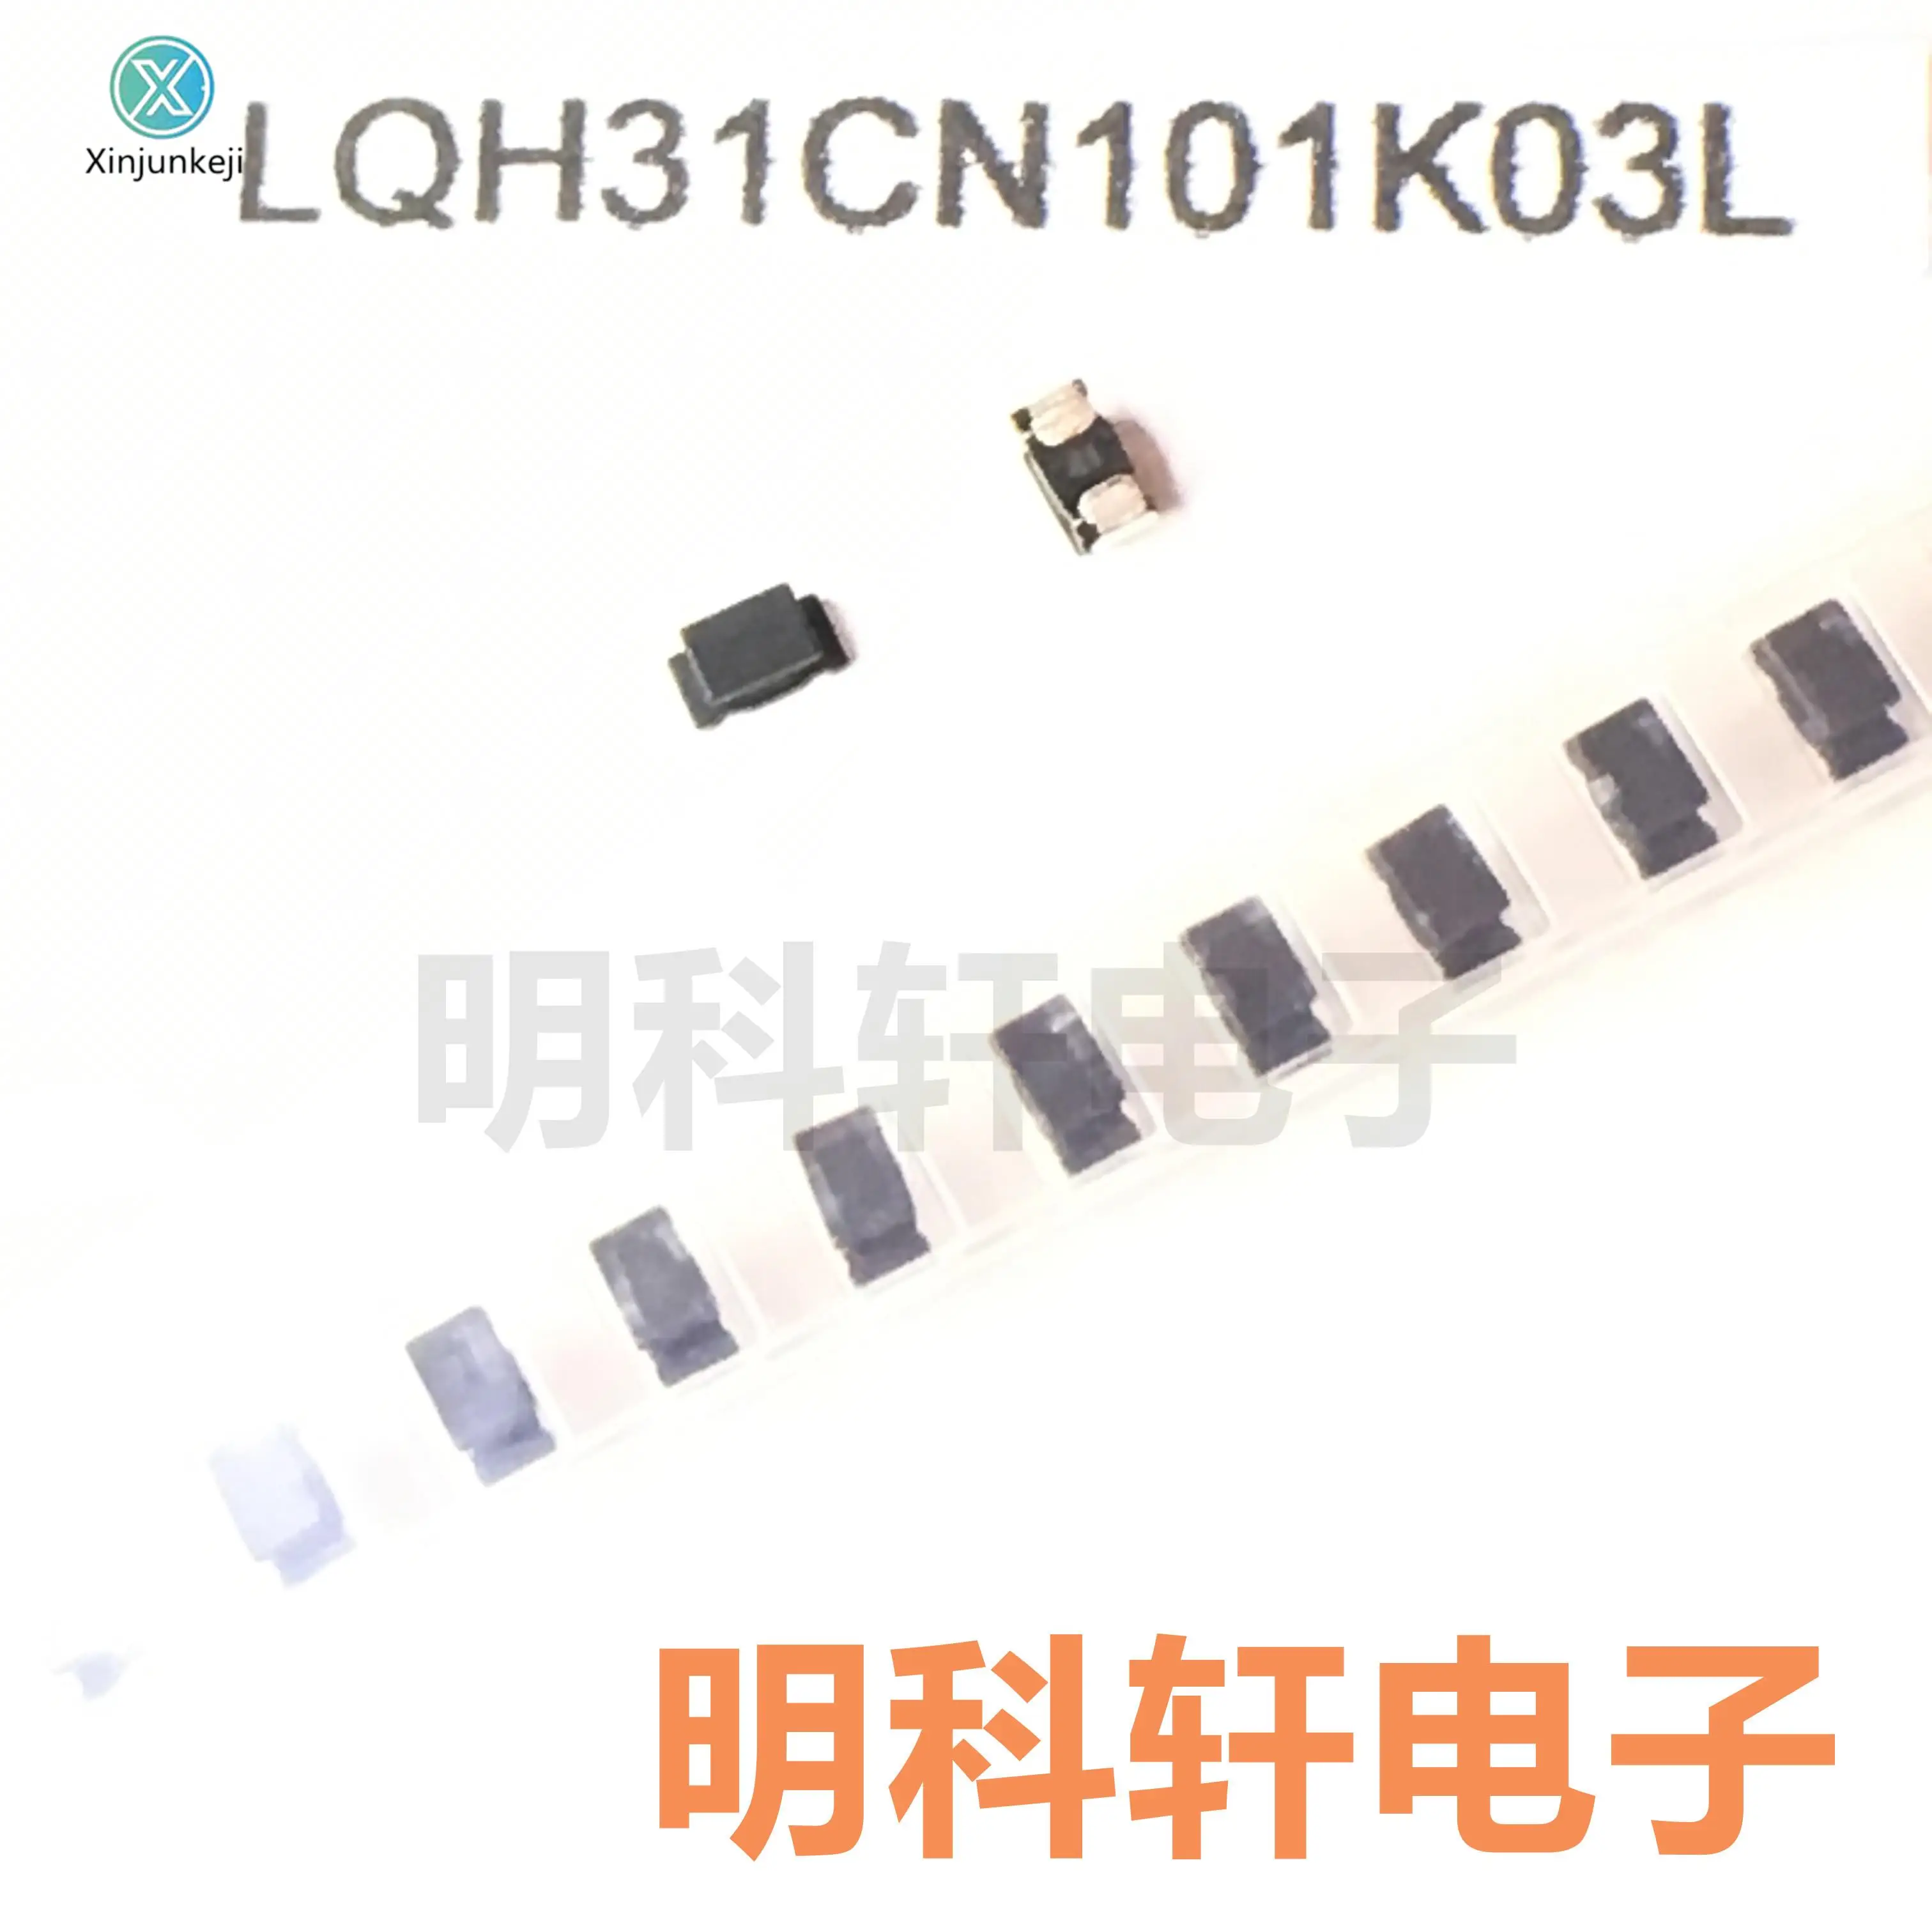 

20pcs orginal new LQH31CN101K03L SMD Wound Power Inductor 1206 100UH